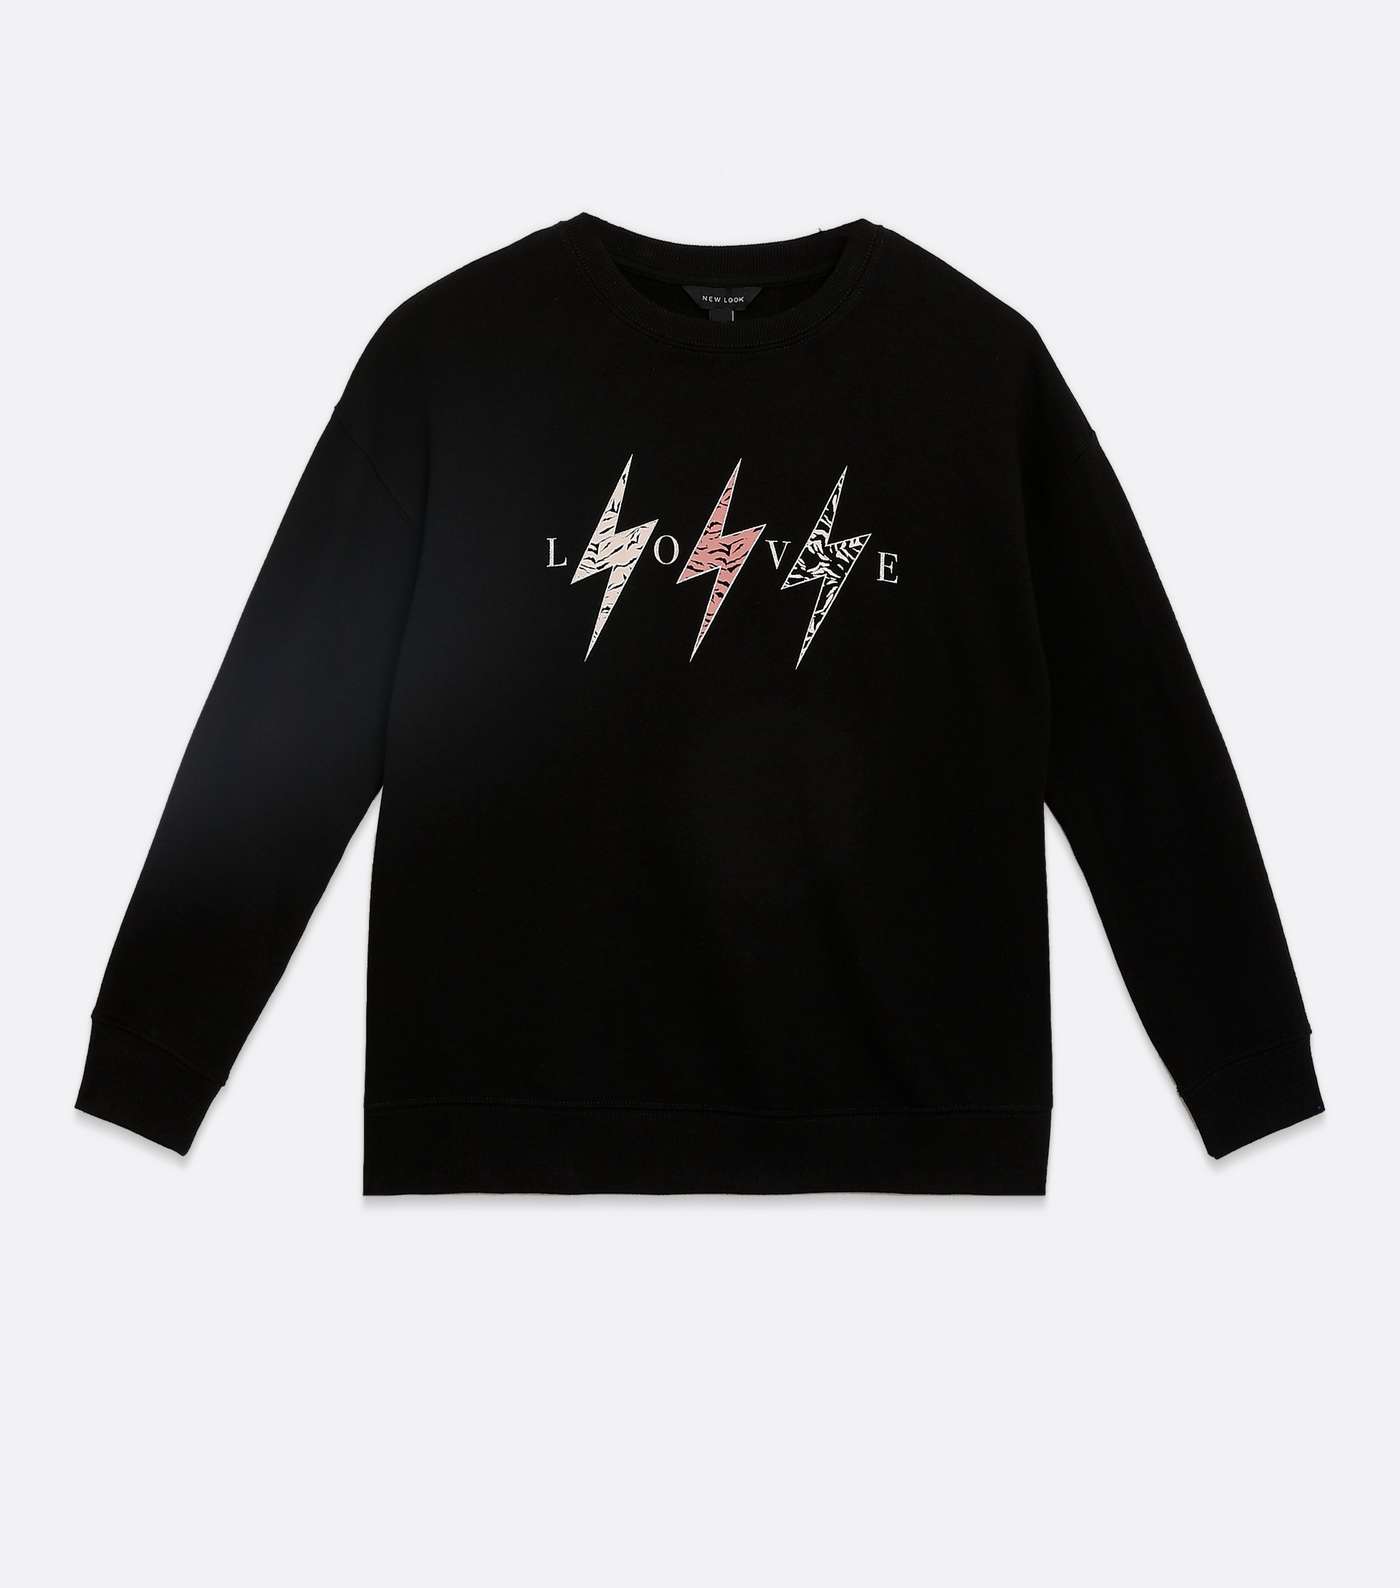 Black Lightning Bolt Embroidered Sweatshirt Image 5